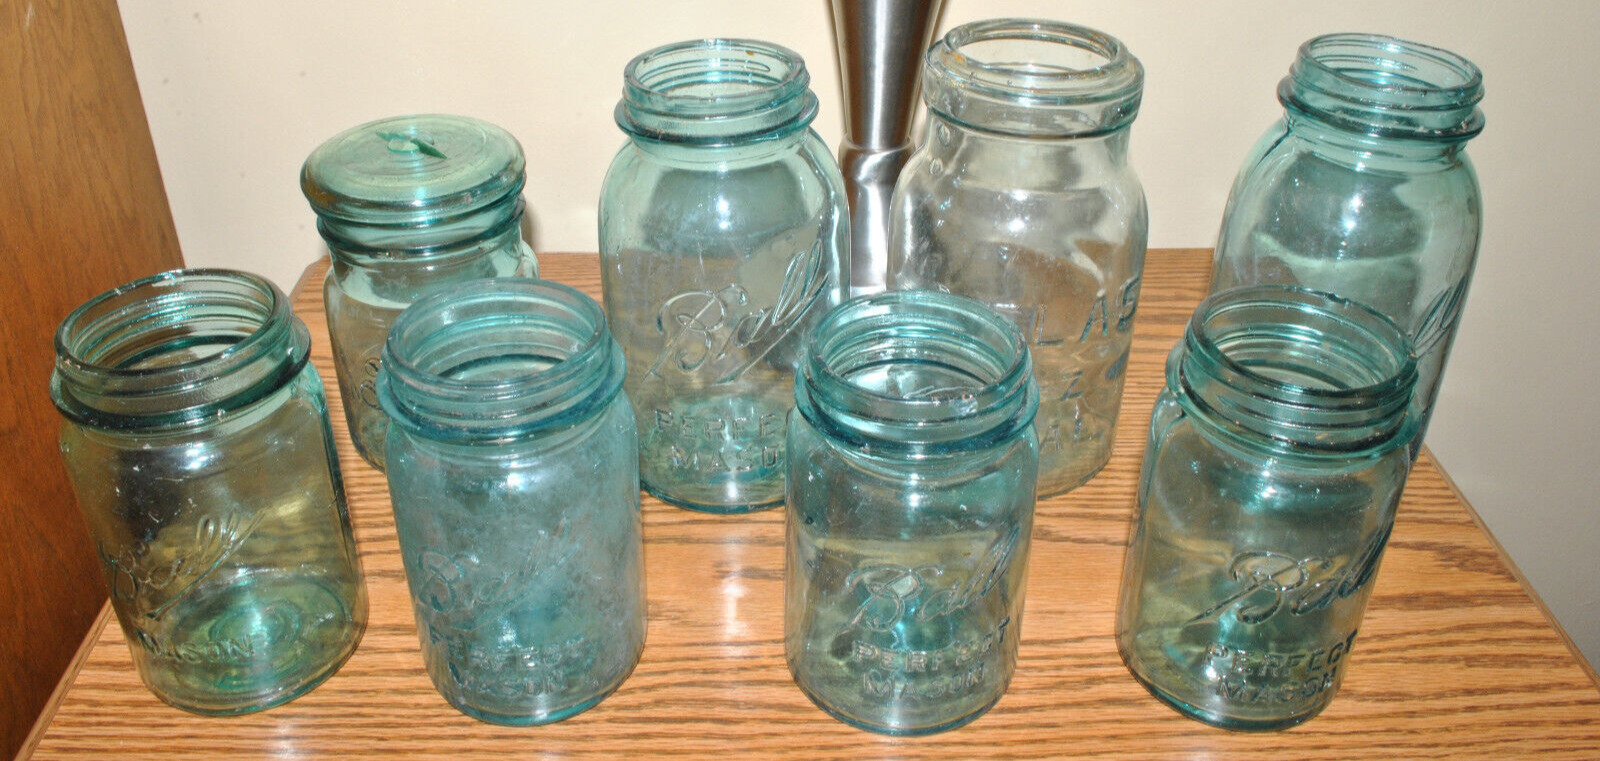 Vintage Early 1900s Mason Jar Lot of 8 w/ Ball Aquas, Atlas E-Z Seal, Sure Seal